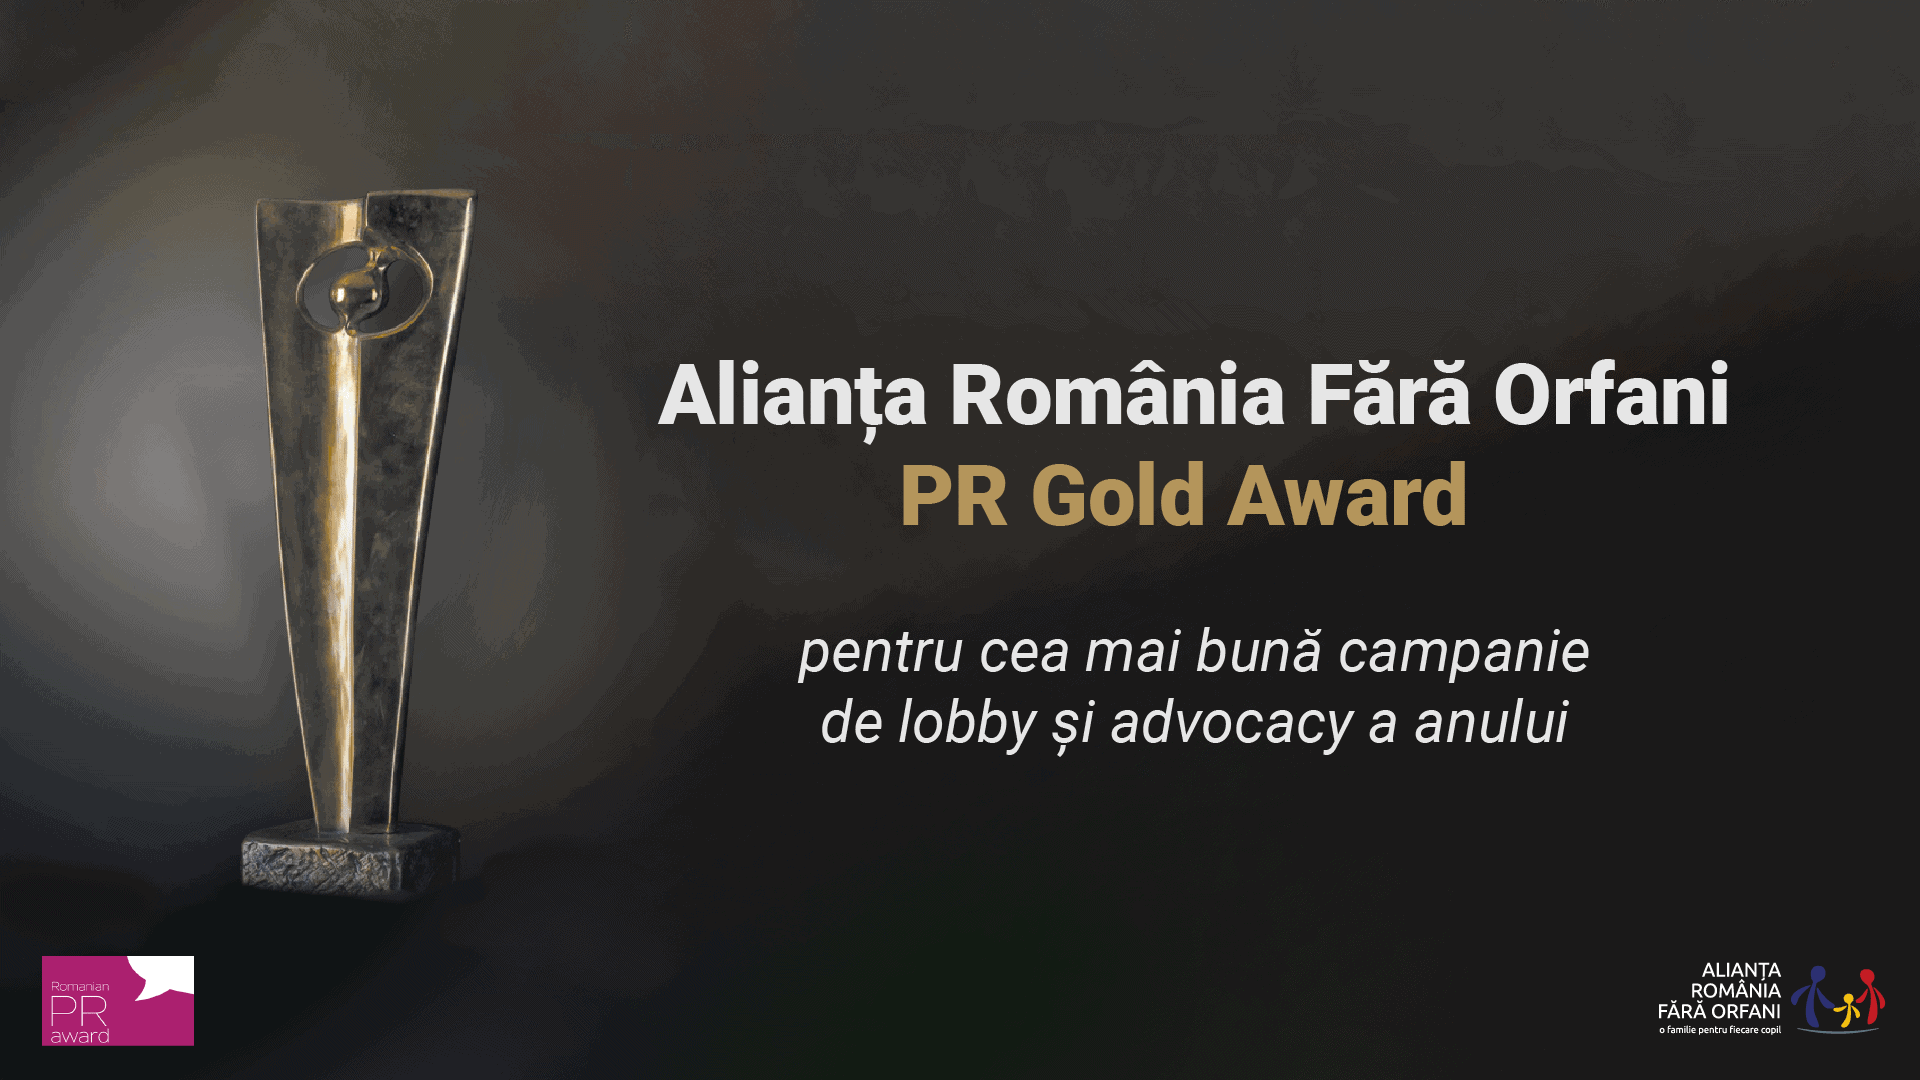 ARFO PR award 2020